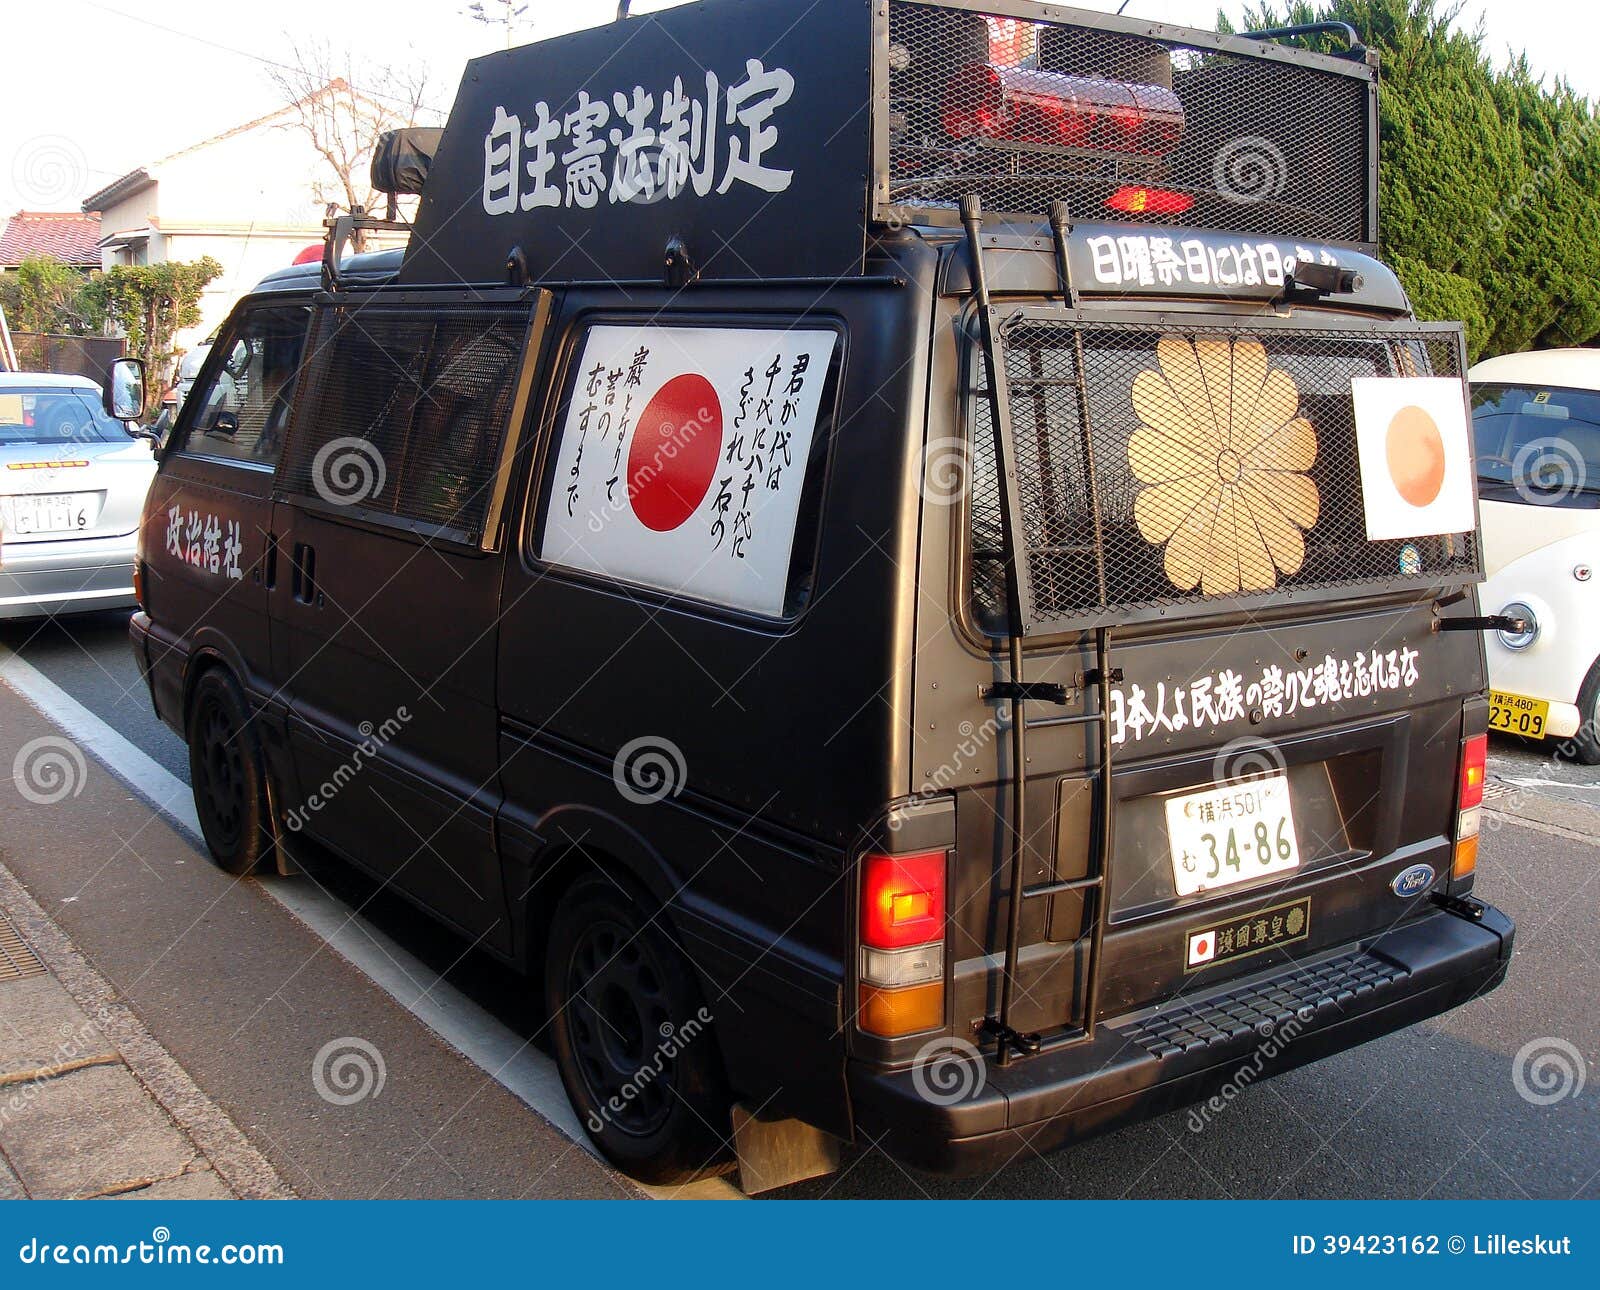 japan-nationalist-right-wing-van-used-propaganda-japanese-group-uyoku-dnatai-black-decorated-slogans-39423162.jpg